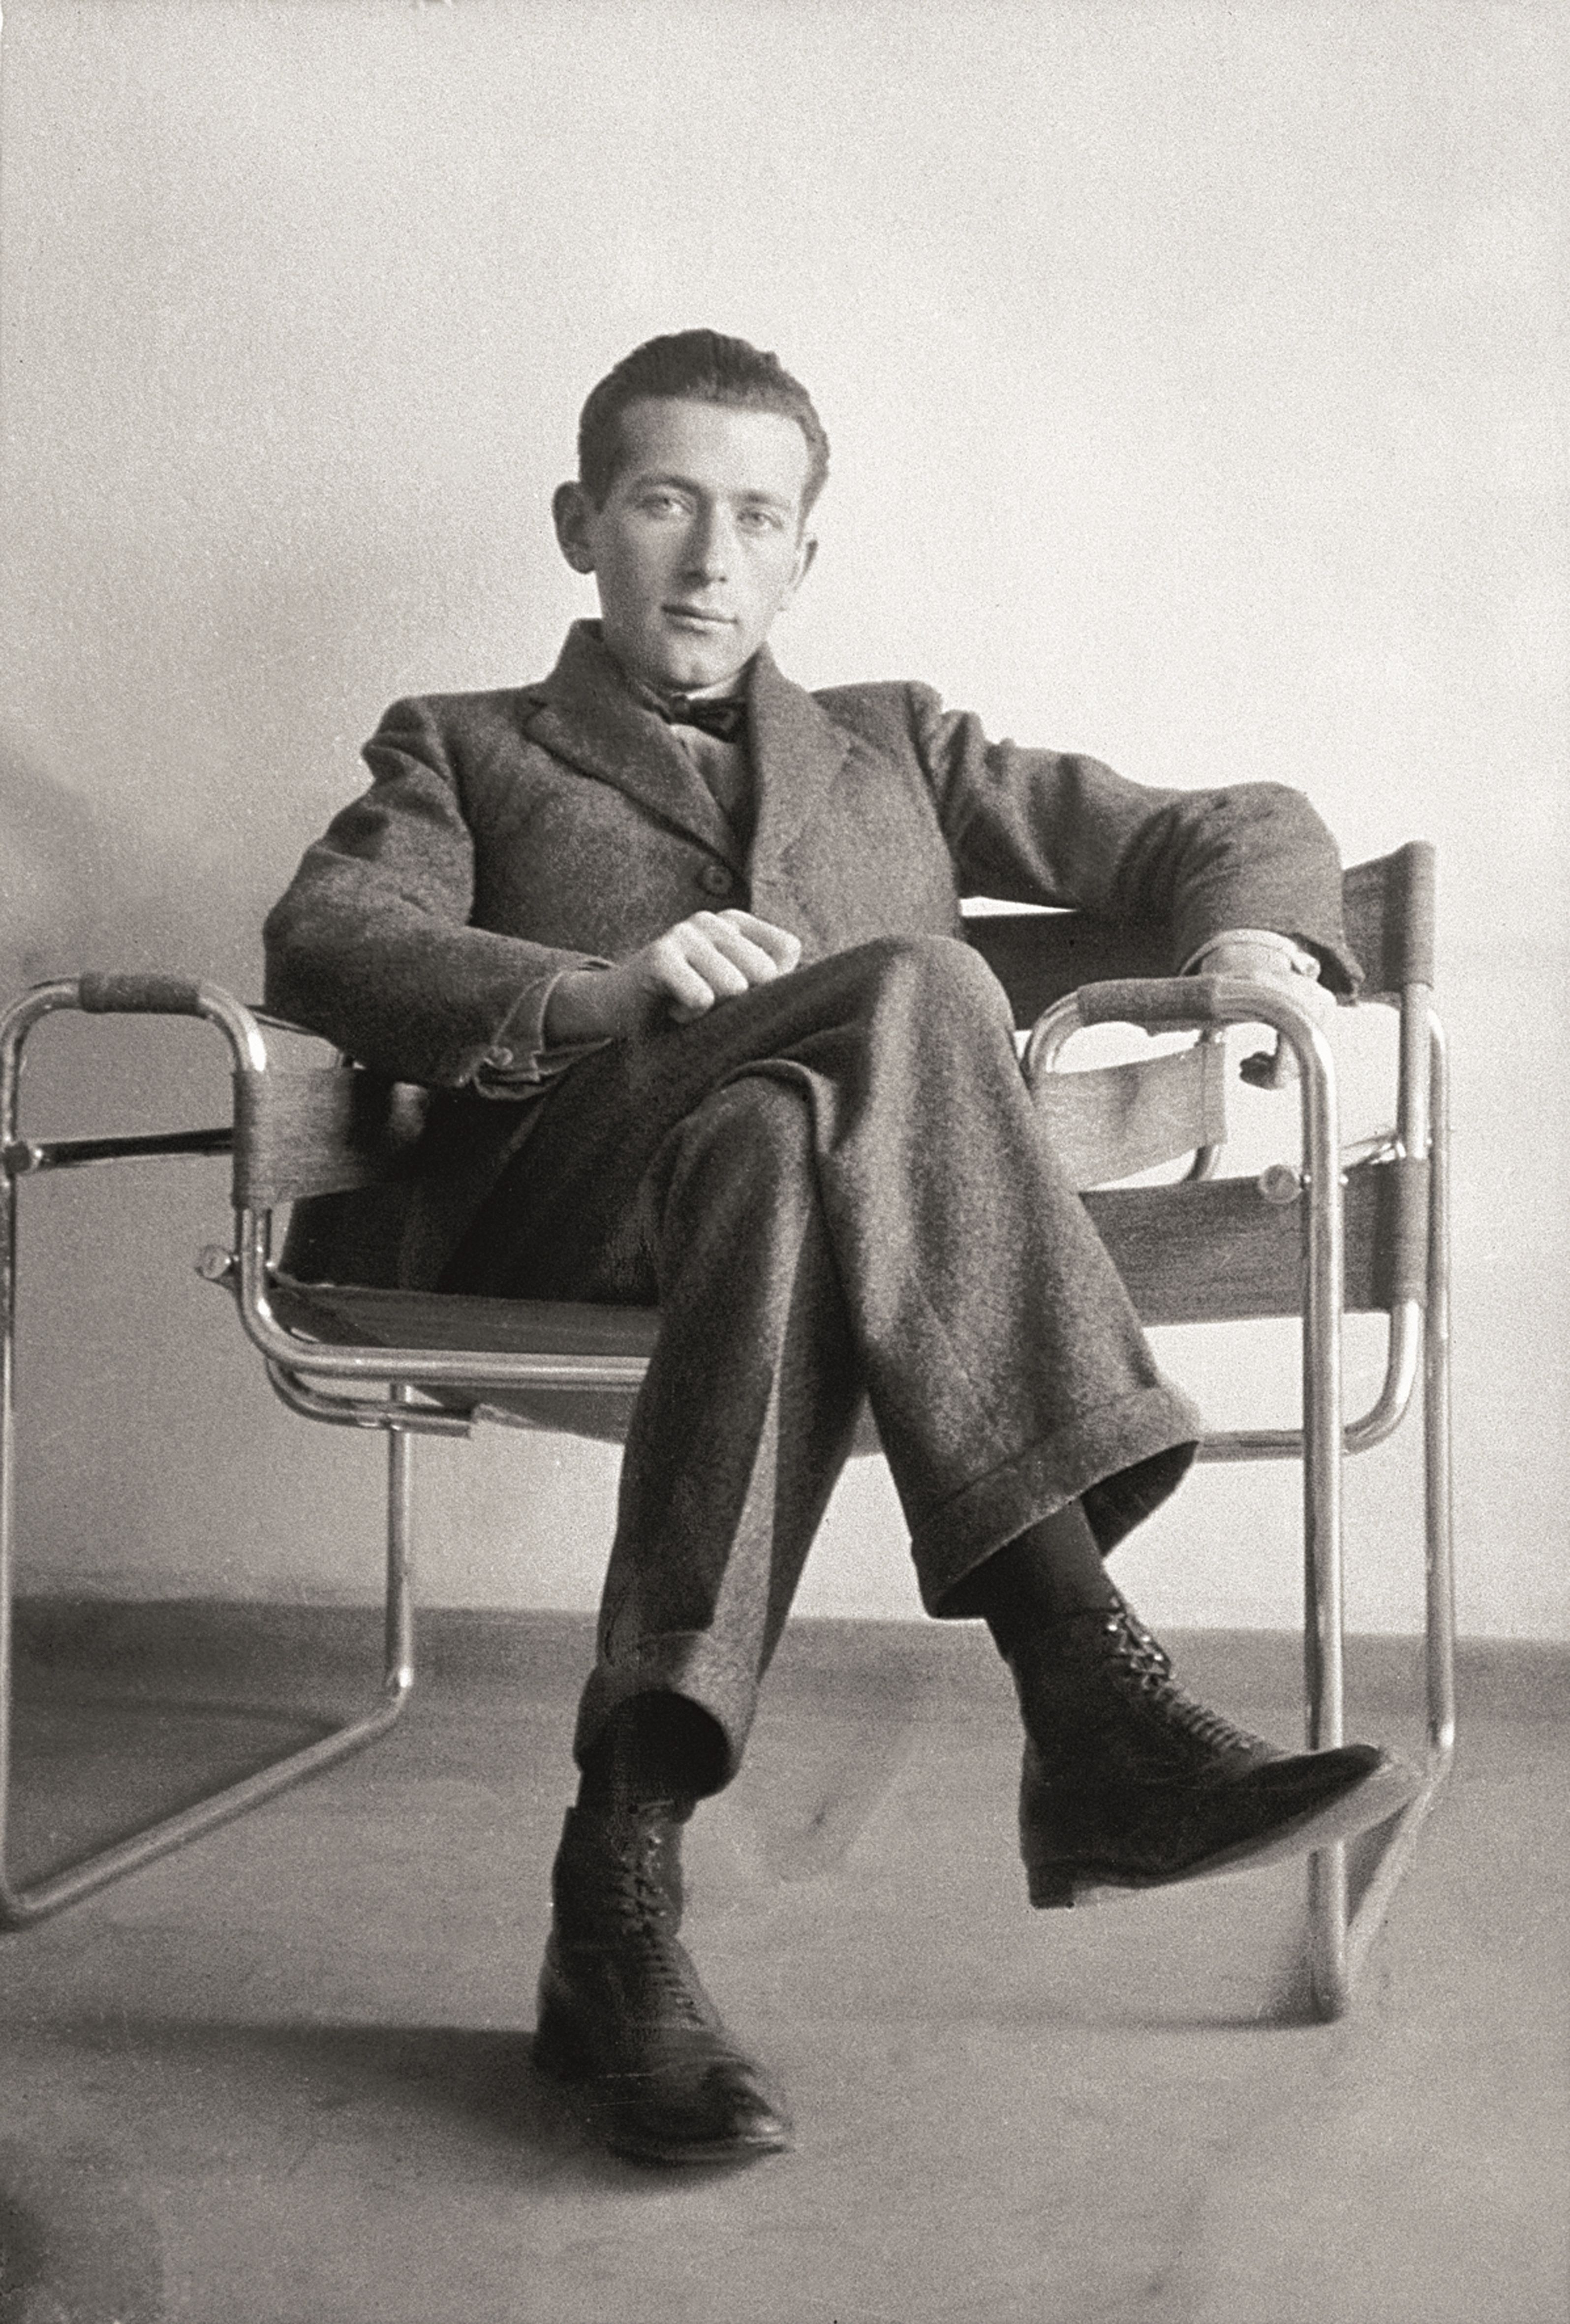 Marcel Breuer, Bauhaus architect and designer